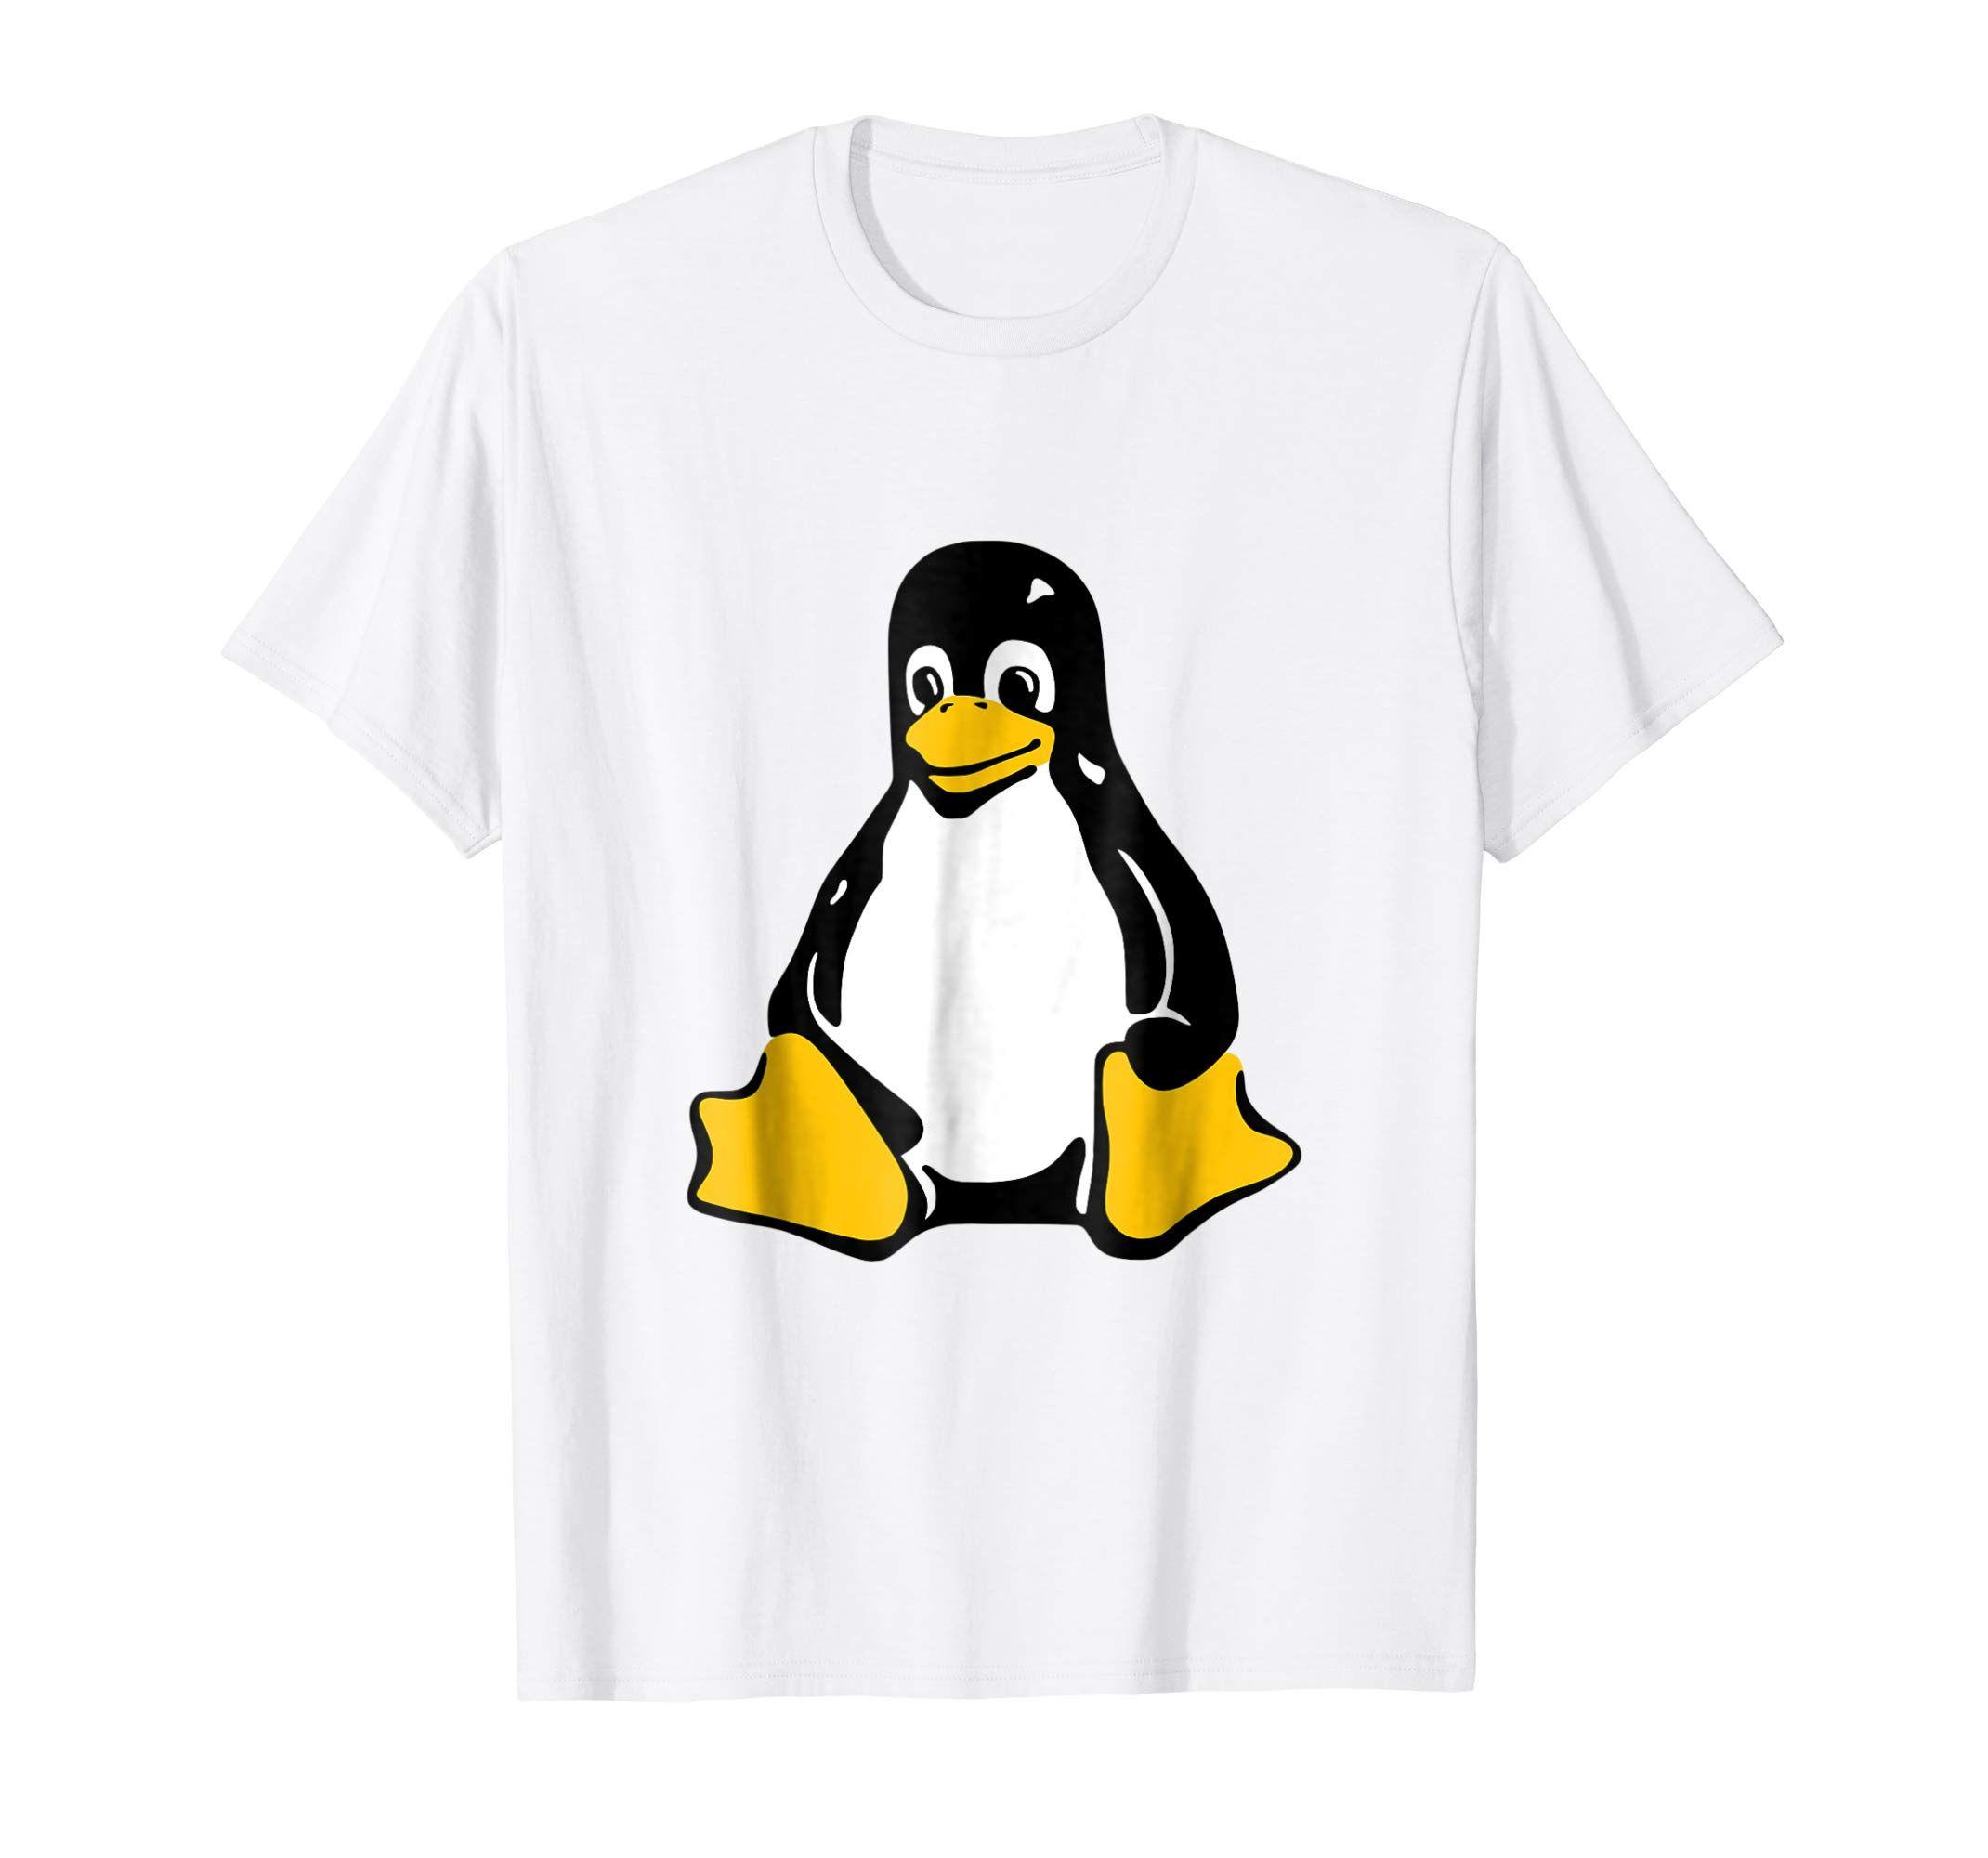 Pequin Logo - Amazon.com: Tux Mascot T-Shirt Penguin Linux Logo: Clothing